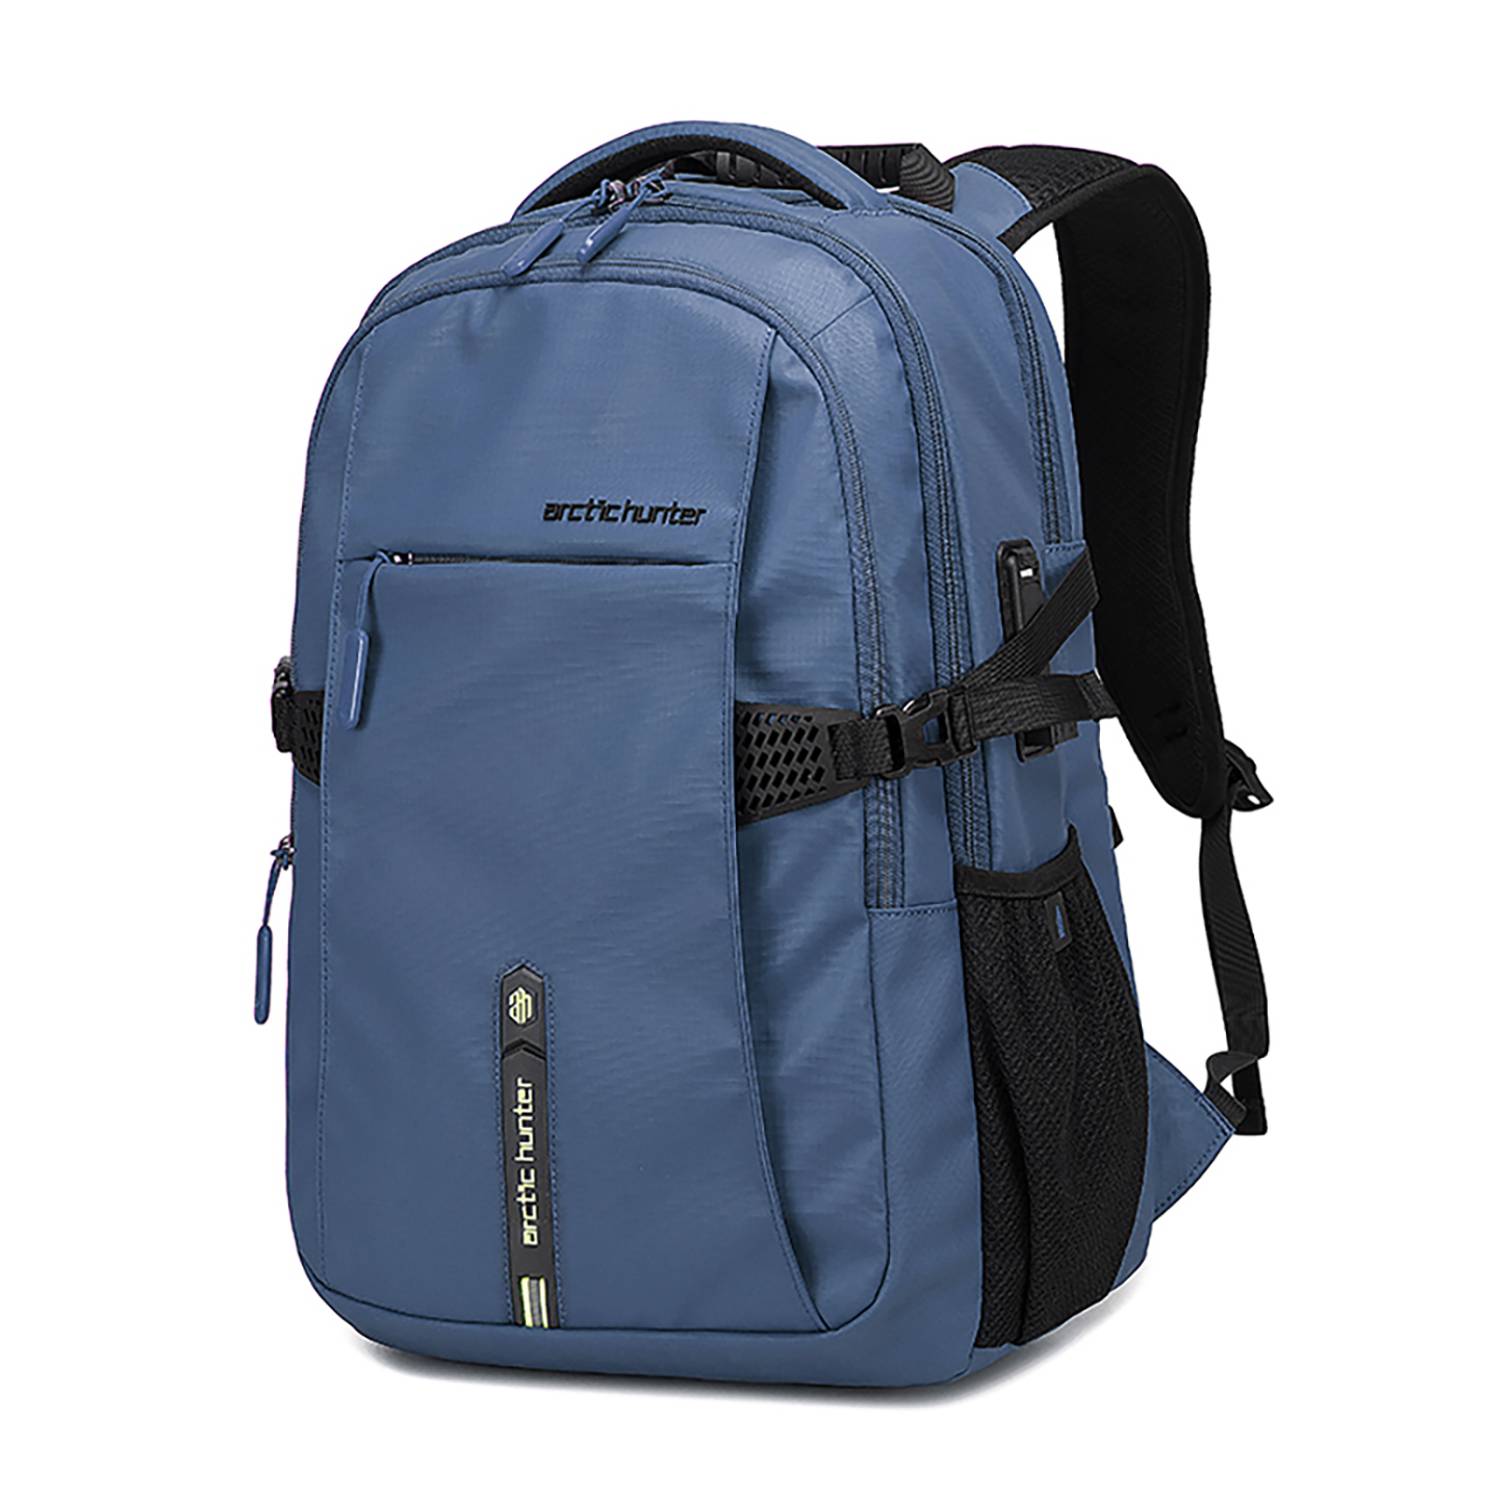 Mochila Puma Phase Backpack 079615 05 Azul para Hombre PUMA